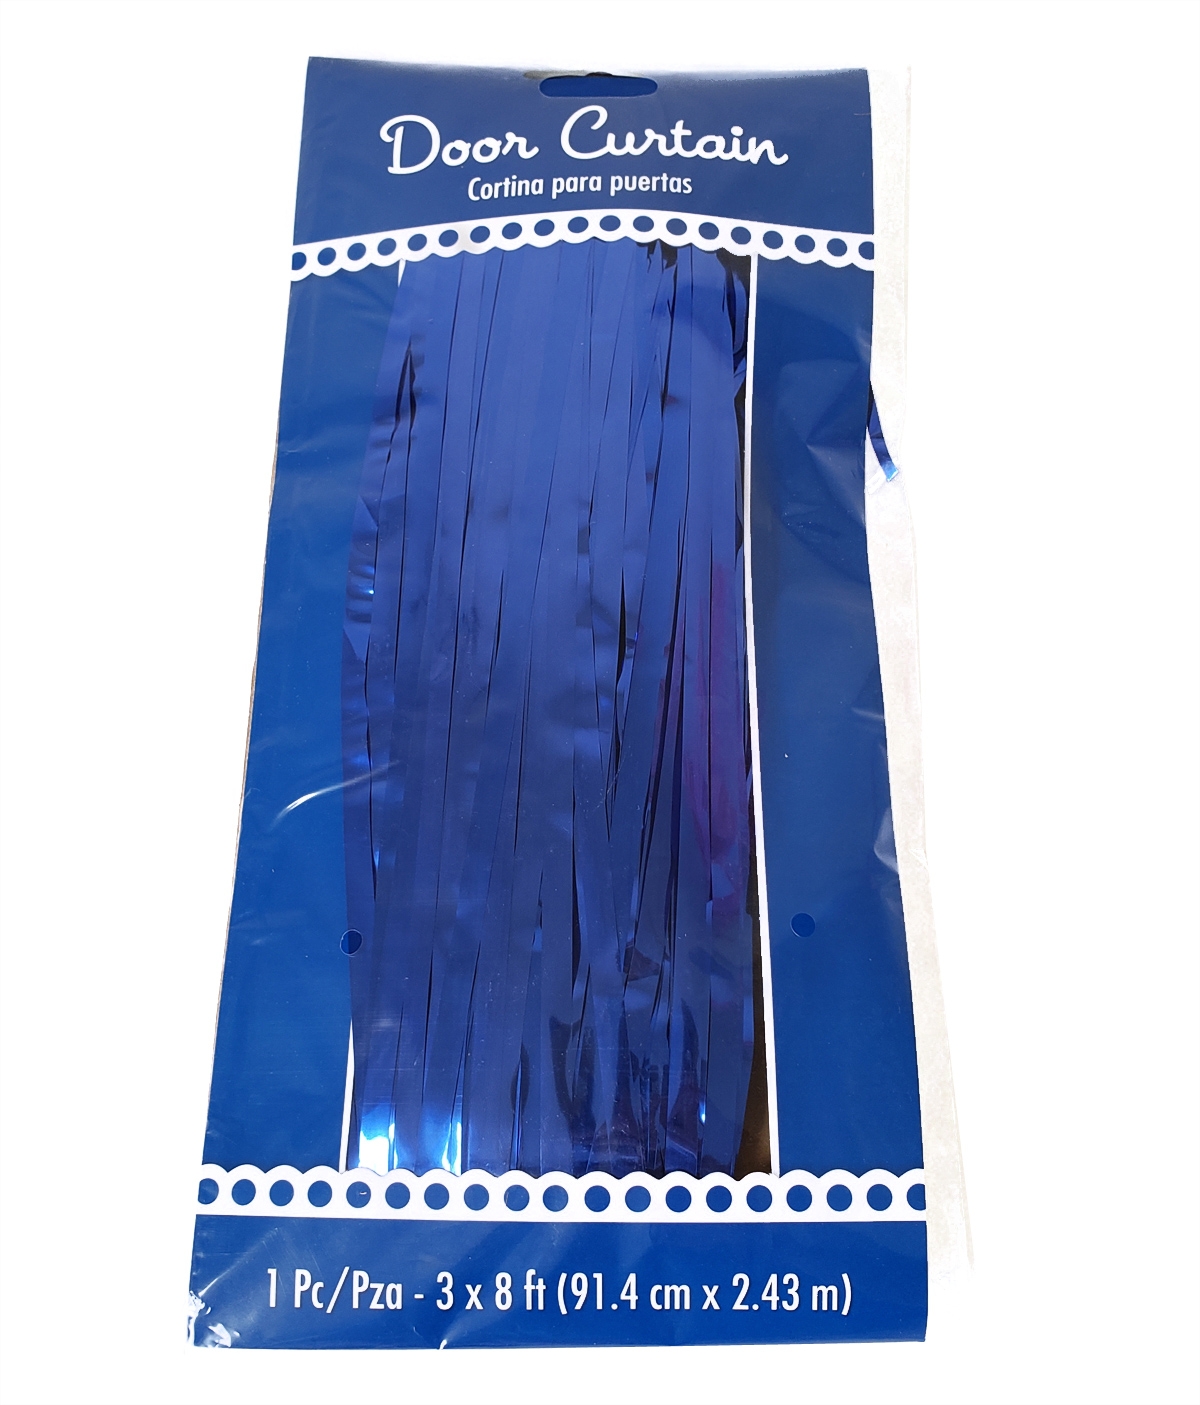 (1) Curtains Metallic 3ftx8ft - Bright Royal Blue